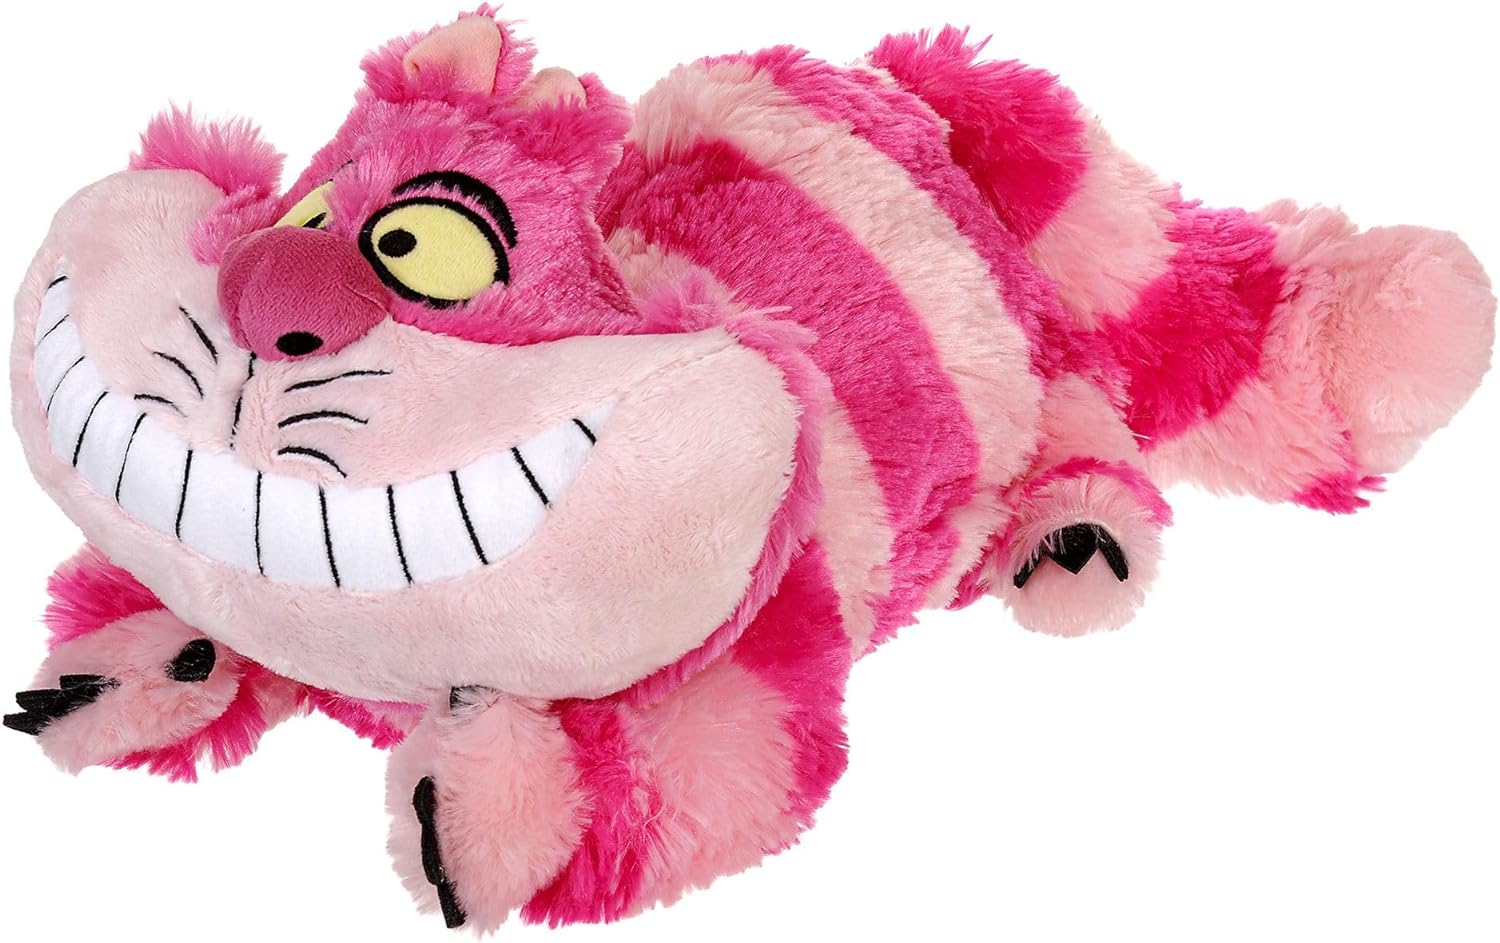 Disney Alice in Wonderland - Cheshire Cat Medium Soft Plush Toy